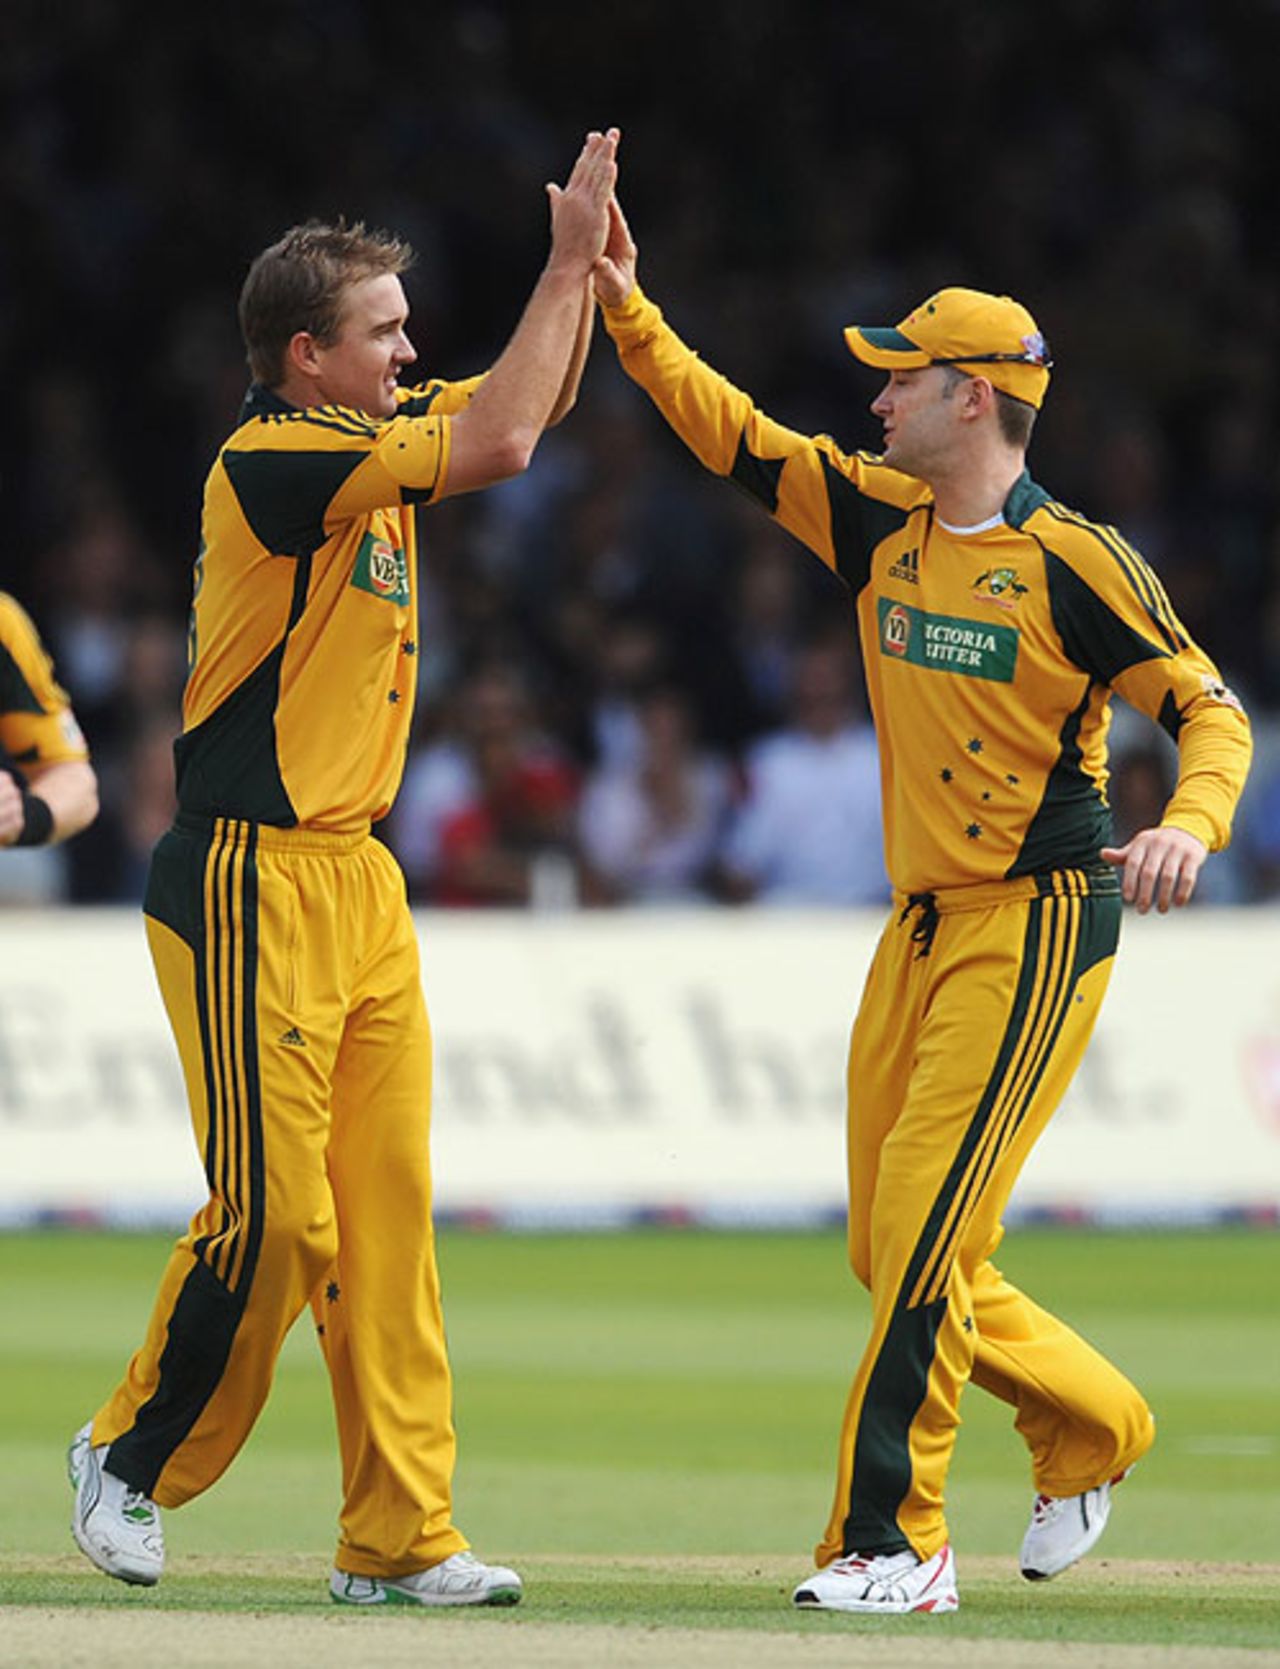 Nathan Hauritz claims the wicket of Ravi Bopara, England v Australia, 4th ODI, Lord's, September 12, 2009